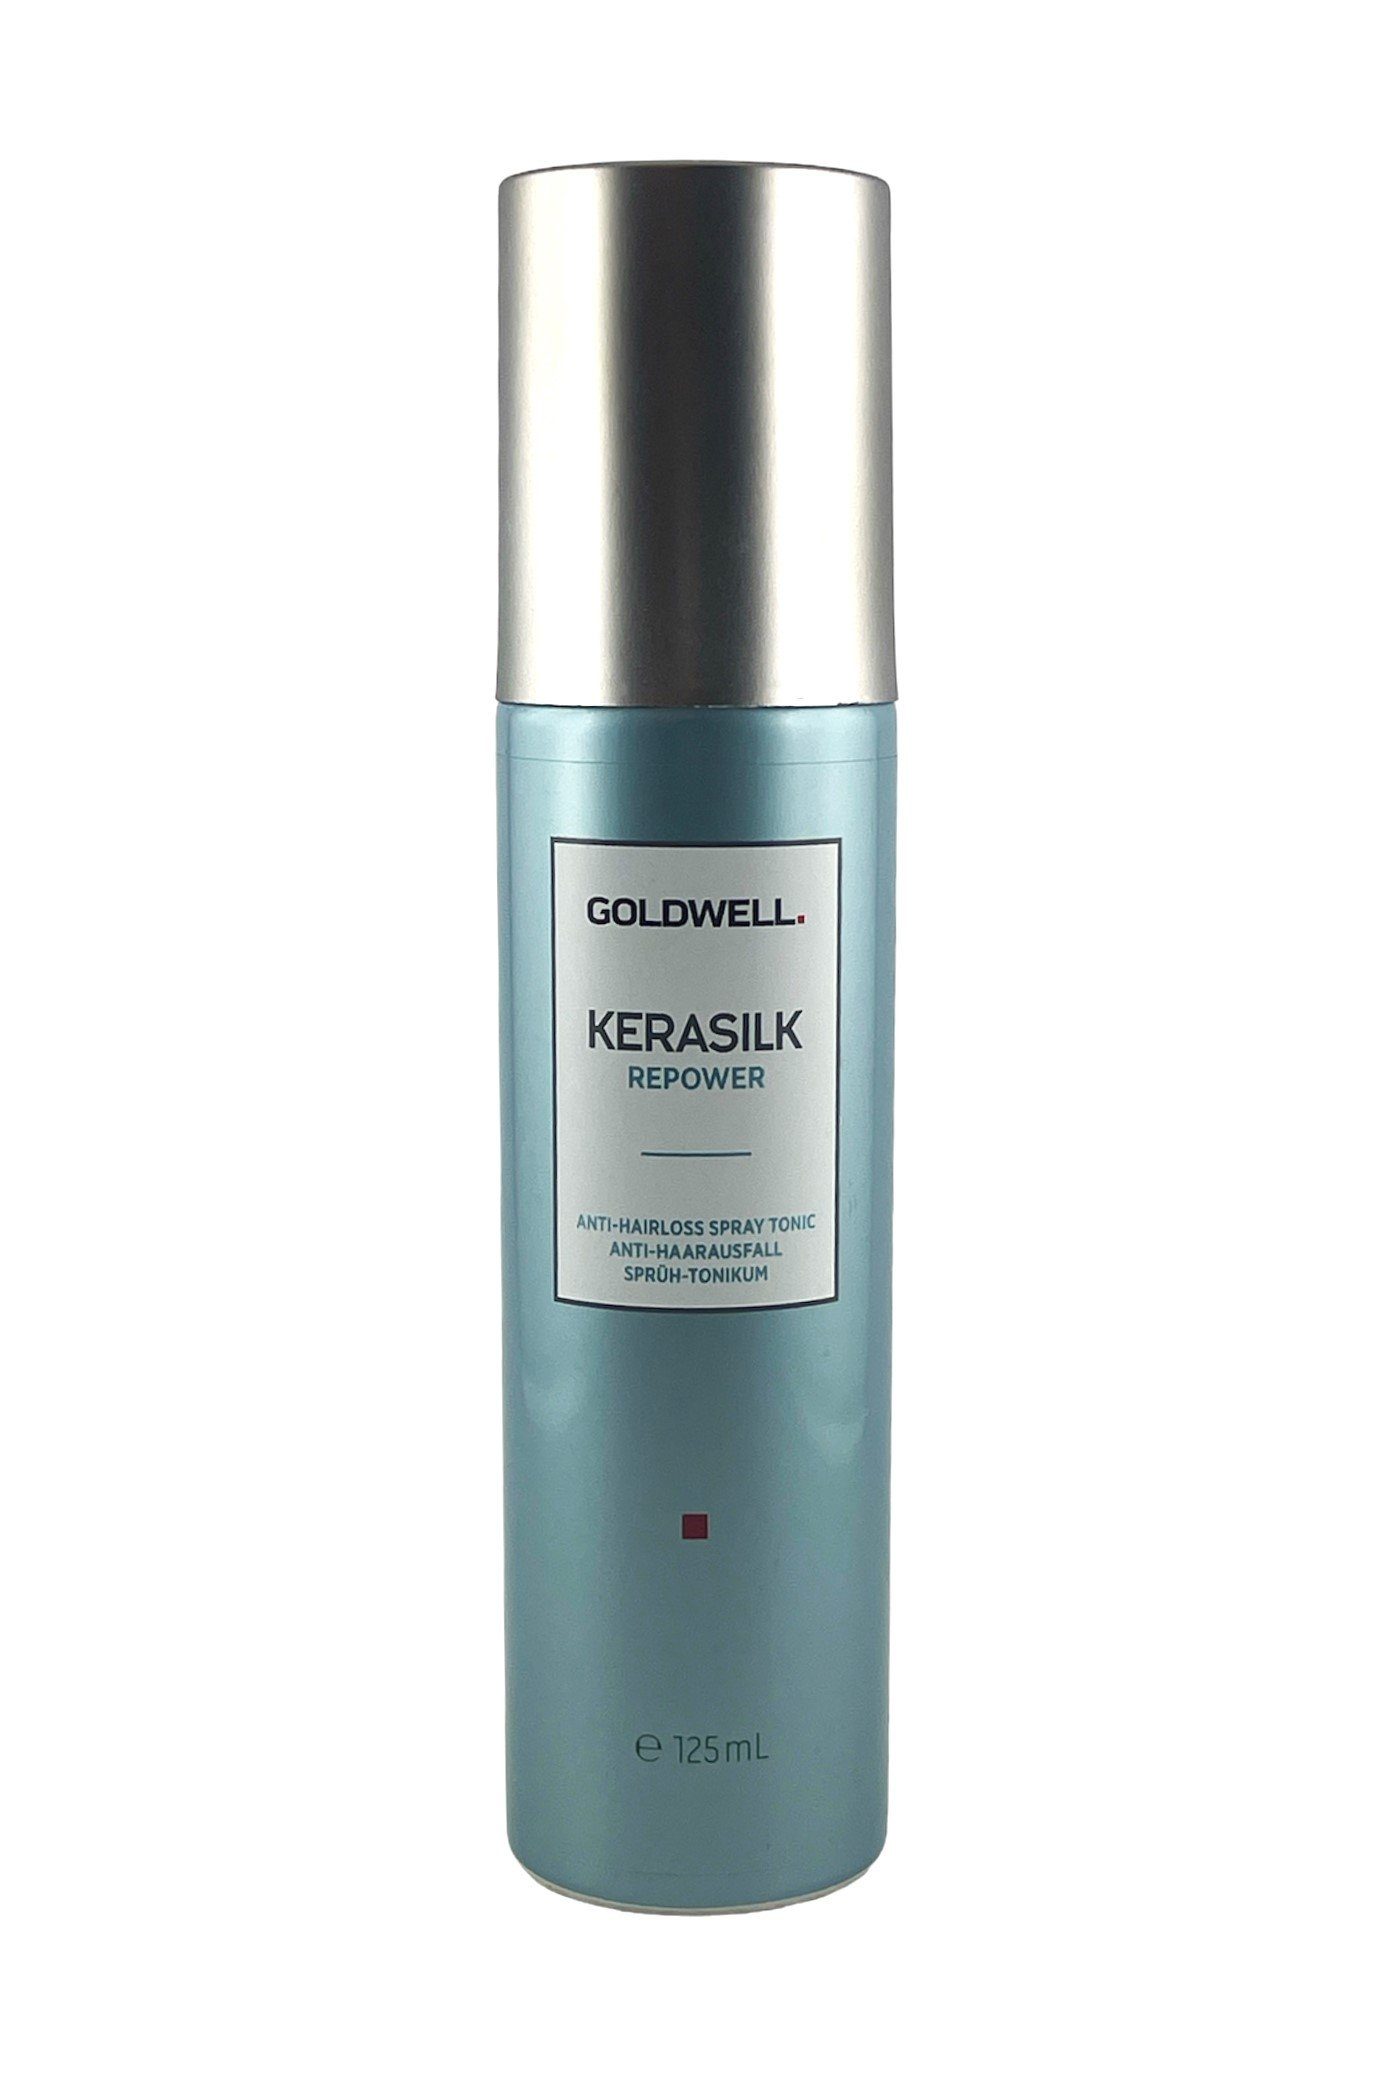 Goldwell Haarspray Goldwell Kerasilk RePower Anti-hairloss Spray Tonic 125ml, 1-tlg. | Haarsprays